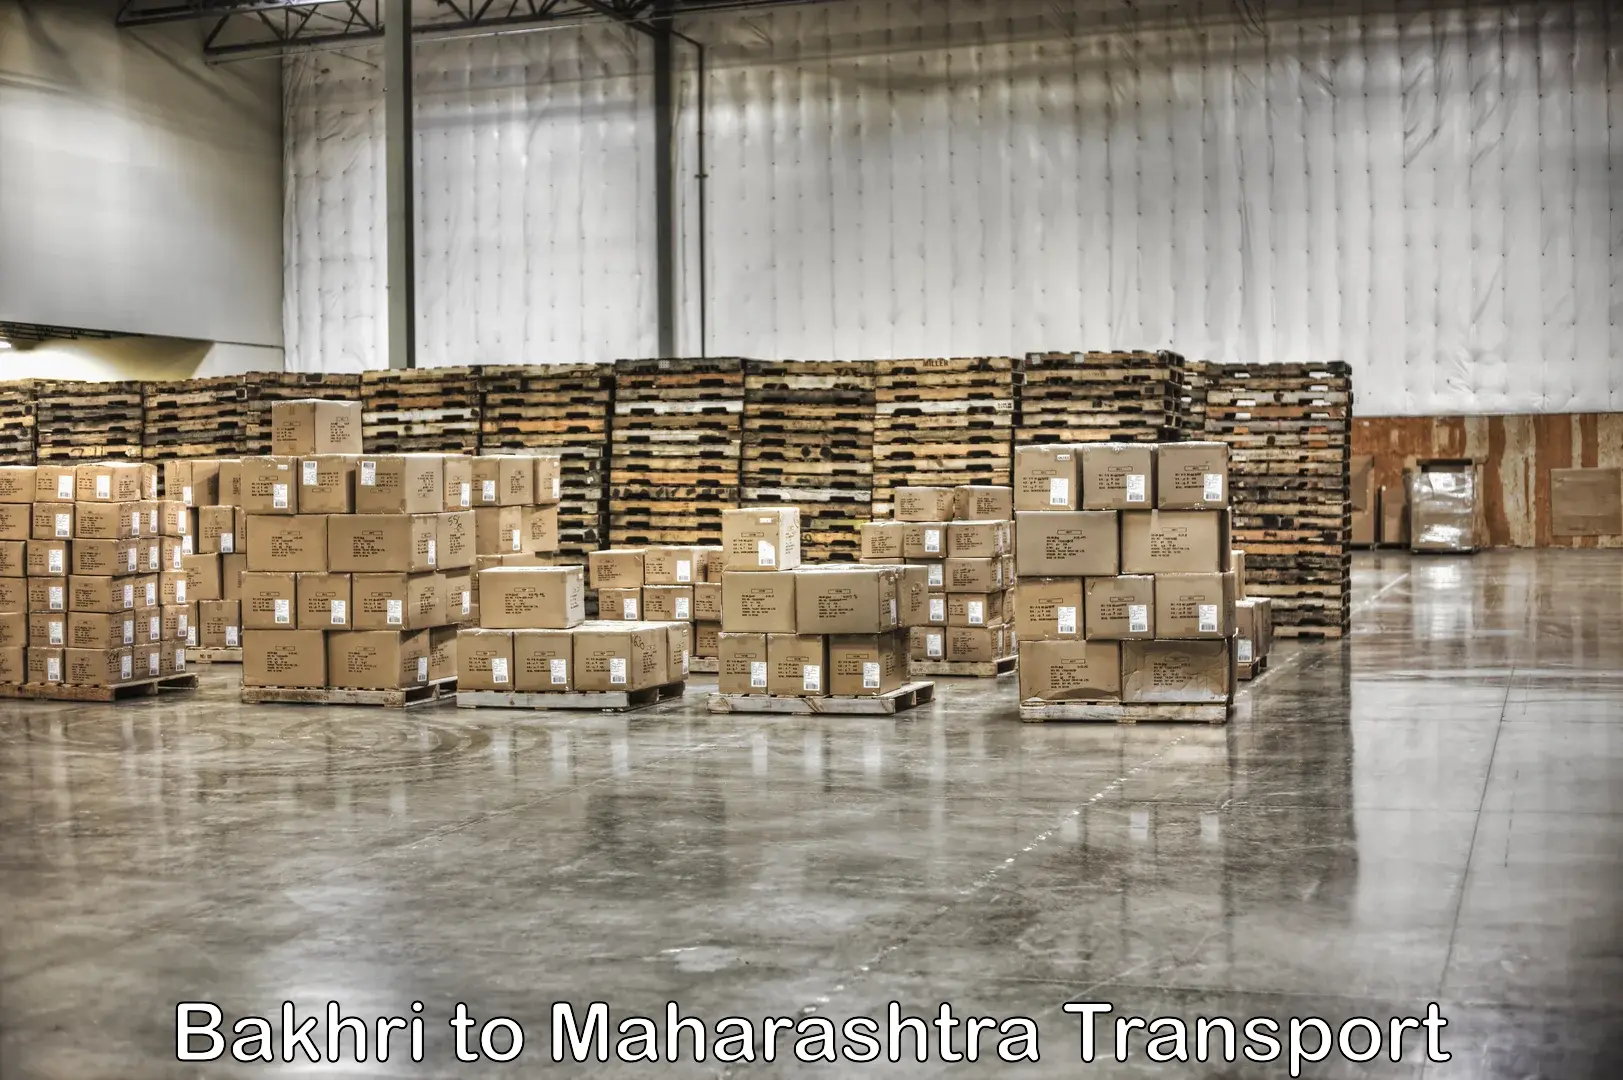 Delivery service in Bakhri to Maharashtra